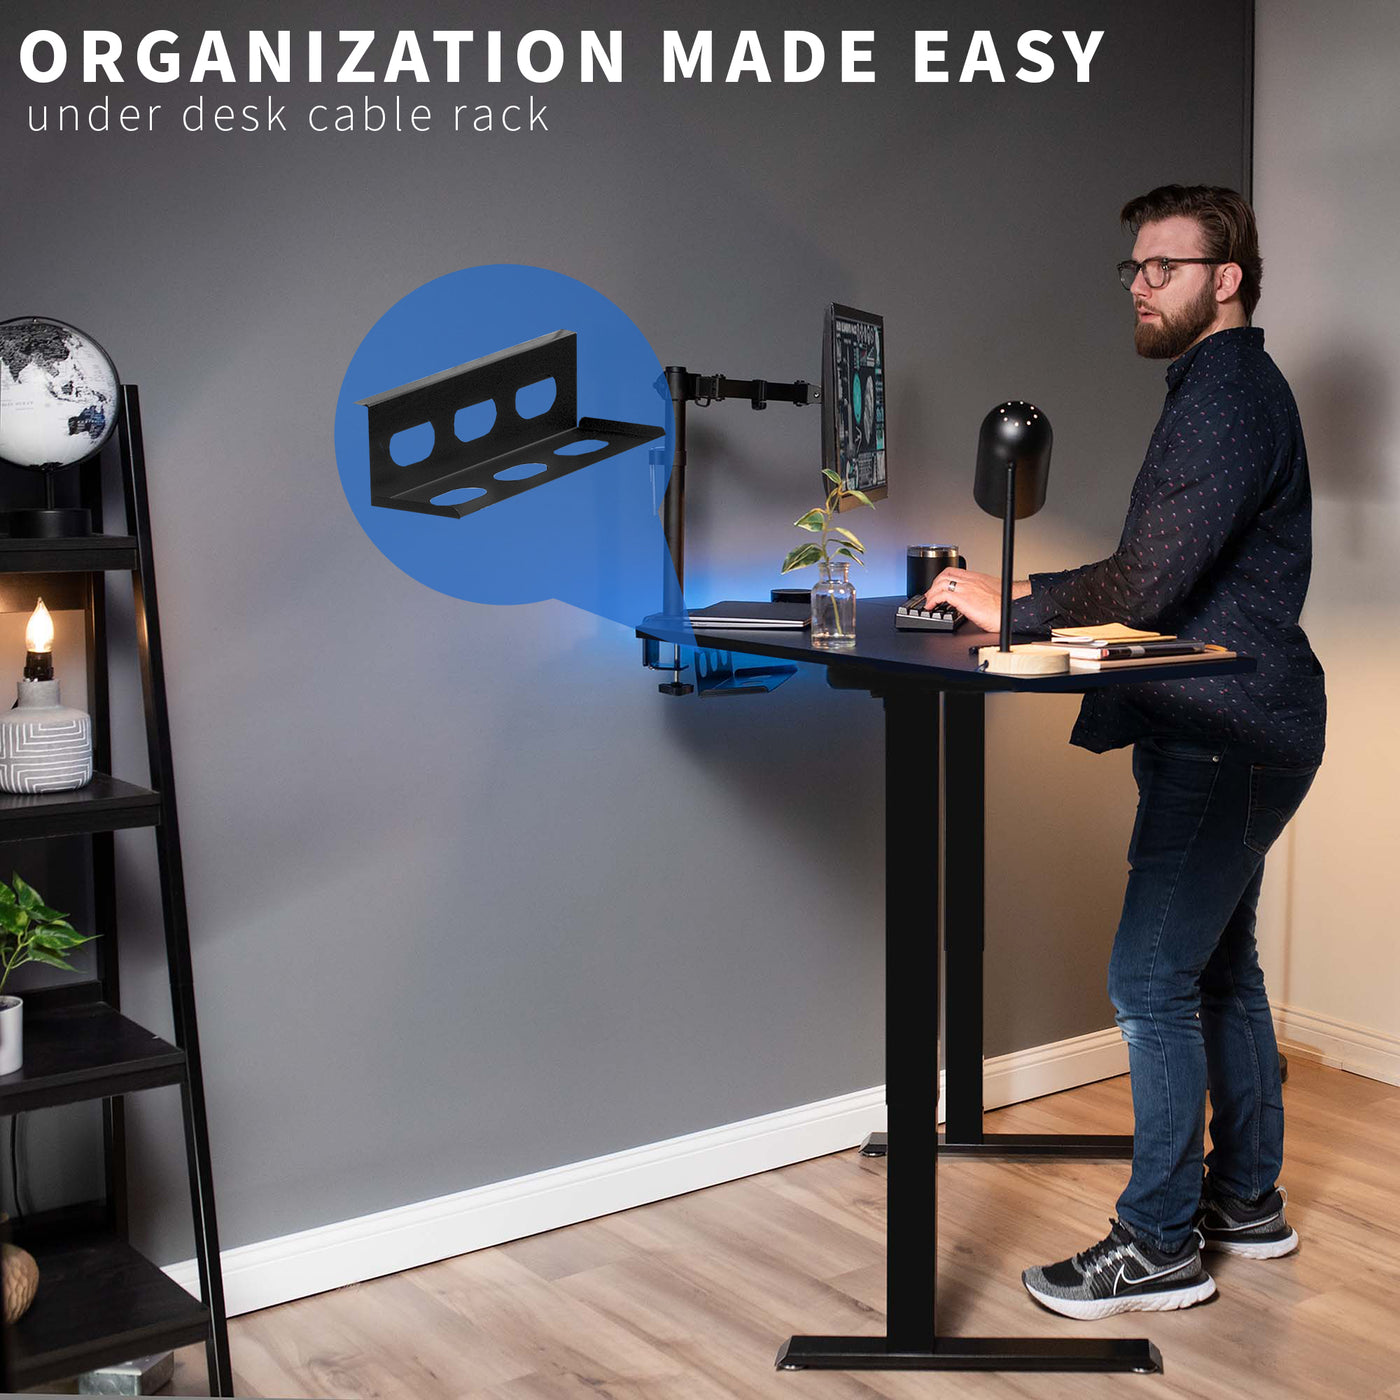 Heavy-duty manual hand crank adjustable height corner desk workstation for efficiency and organization.